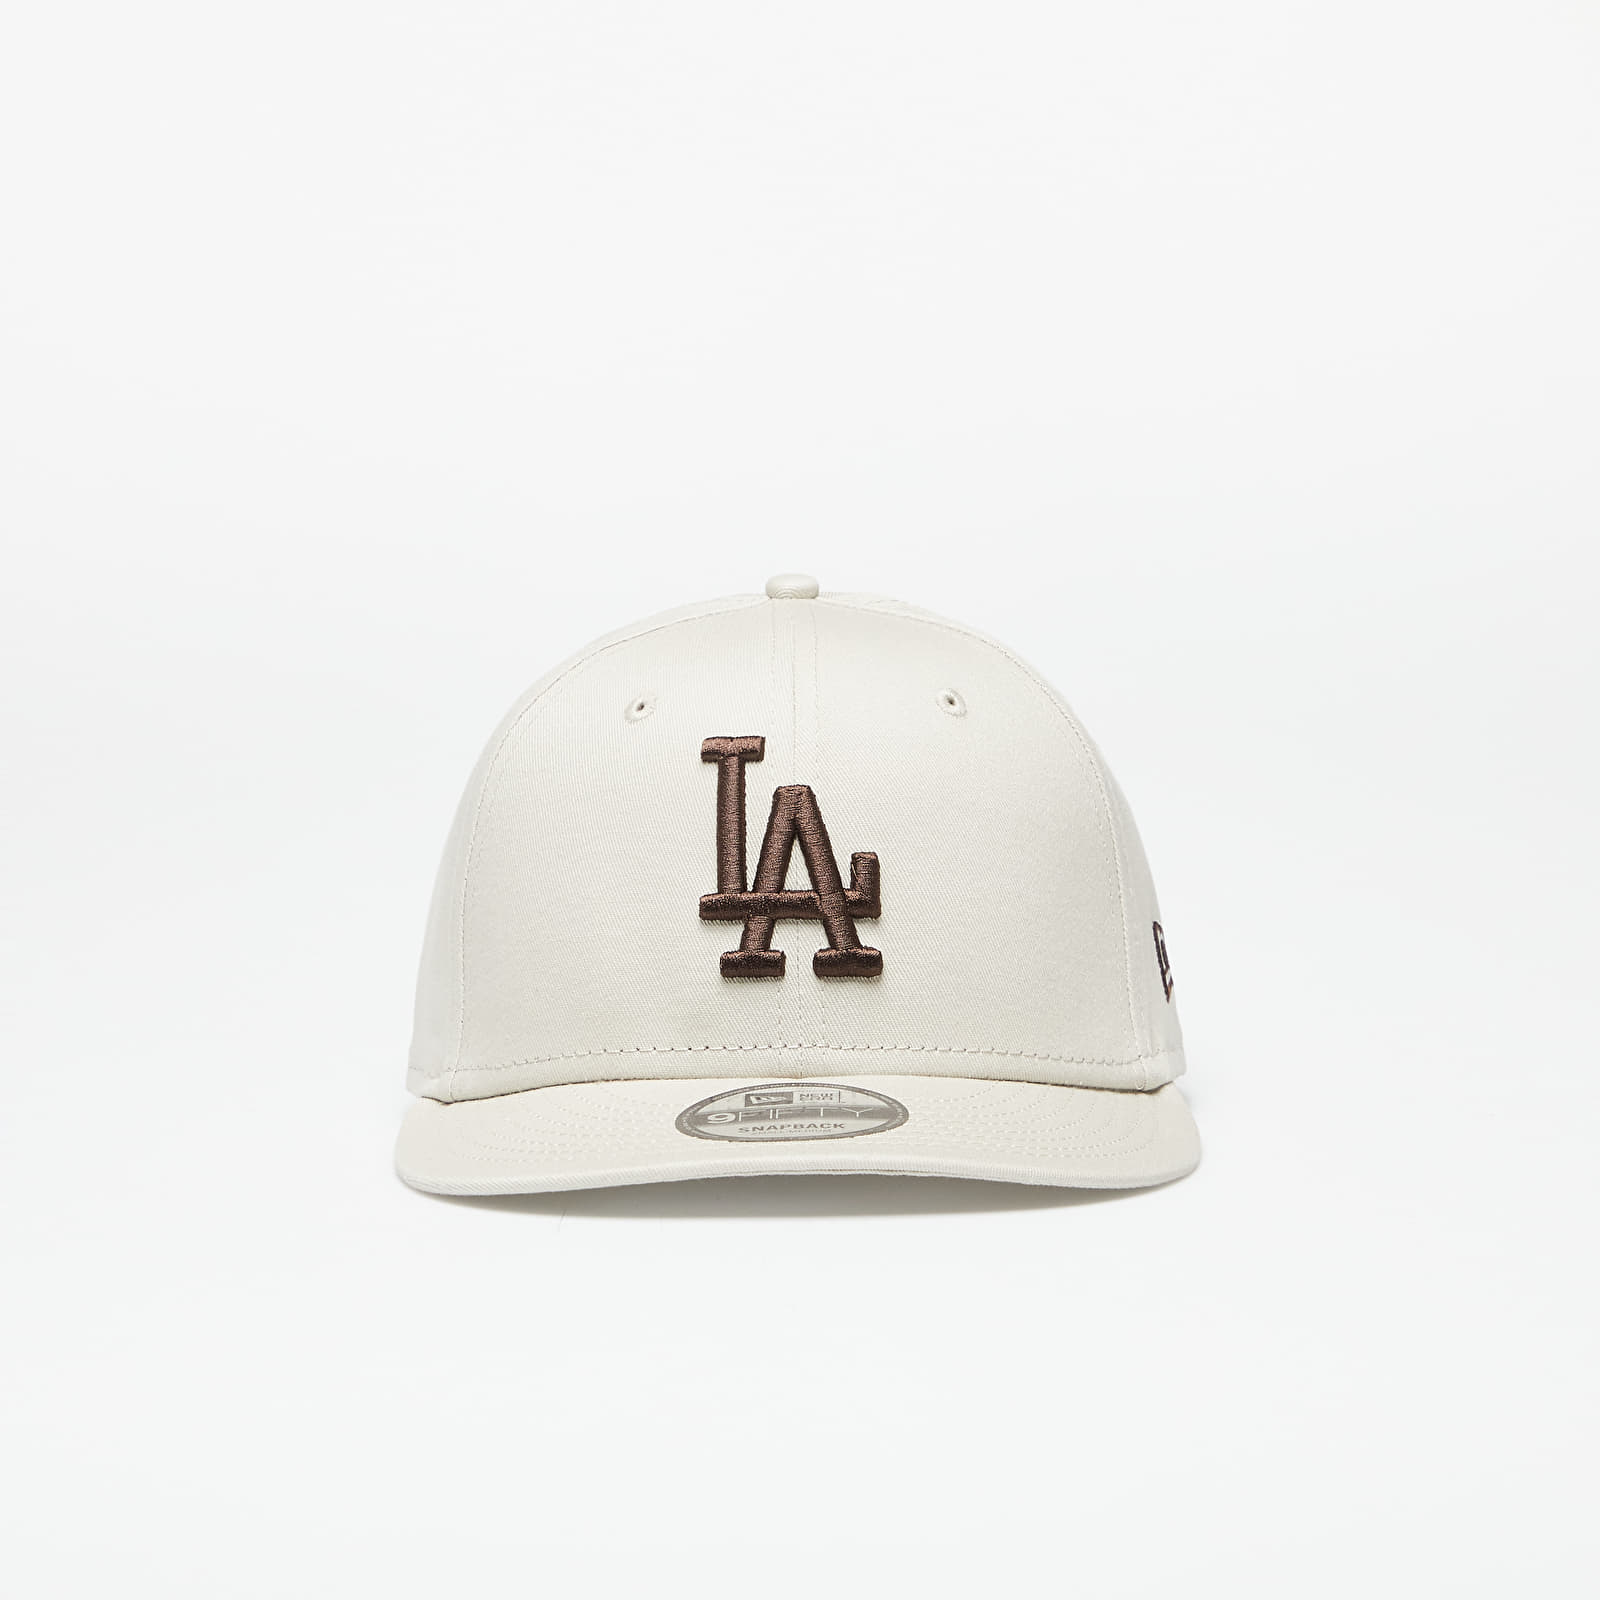 Caps New Era Los Angeles Dodgers League Essential 9FIFTY Snapback Cap Stone/ Nfl Brown Suede